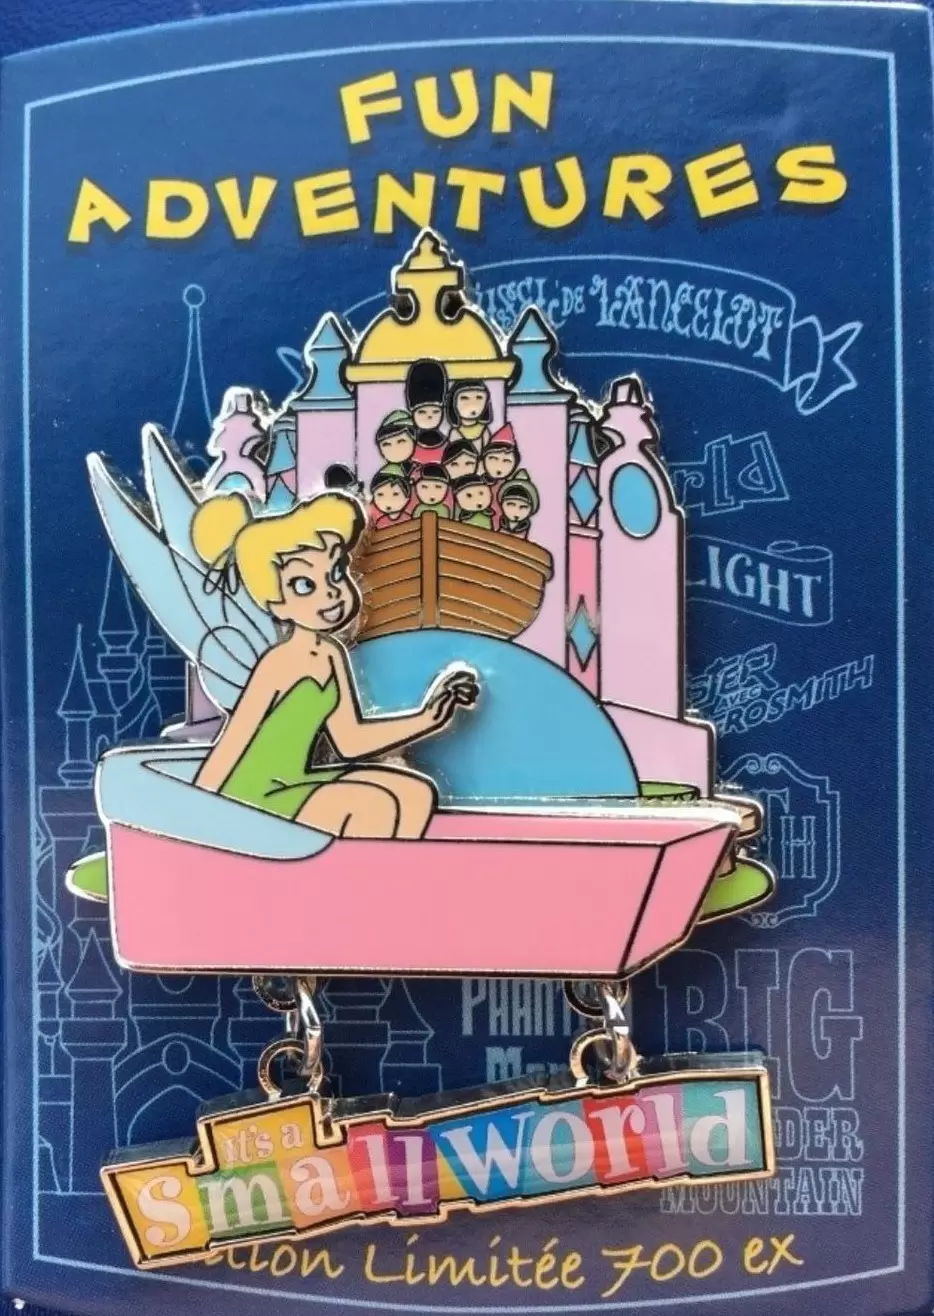 Fun Adventures - Small World